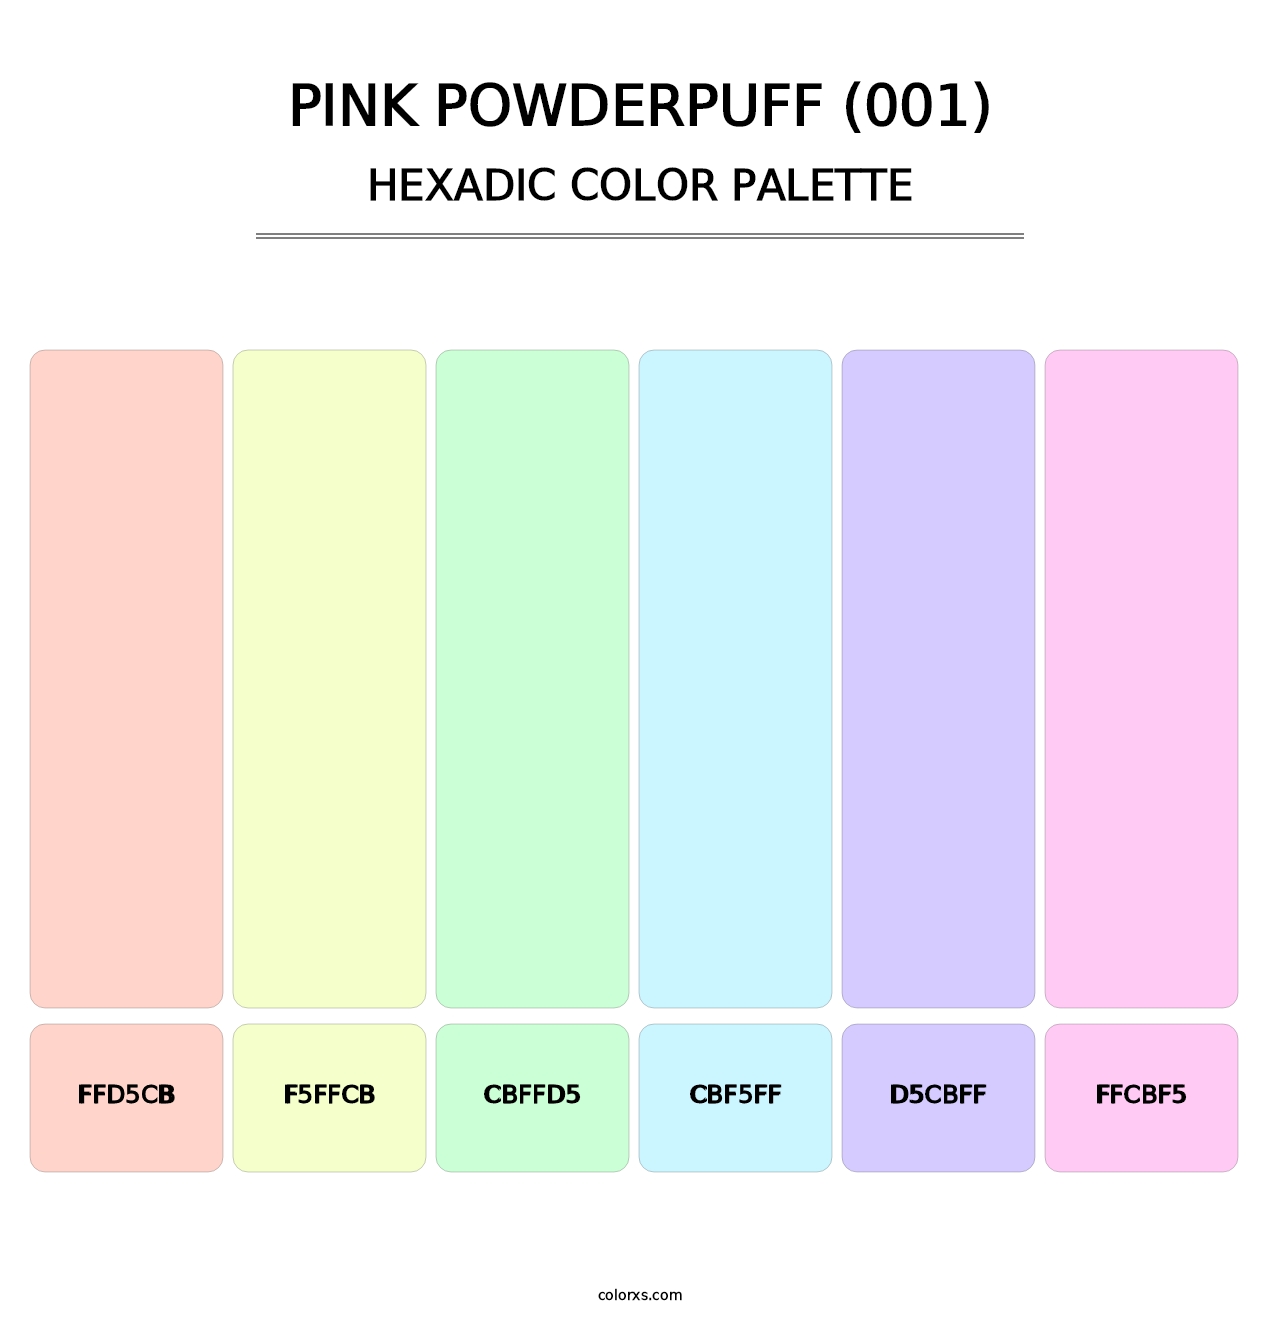 Pink Powderpuff (001) - Hexadic Color Palette